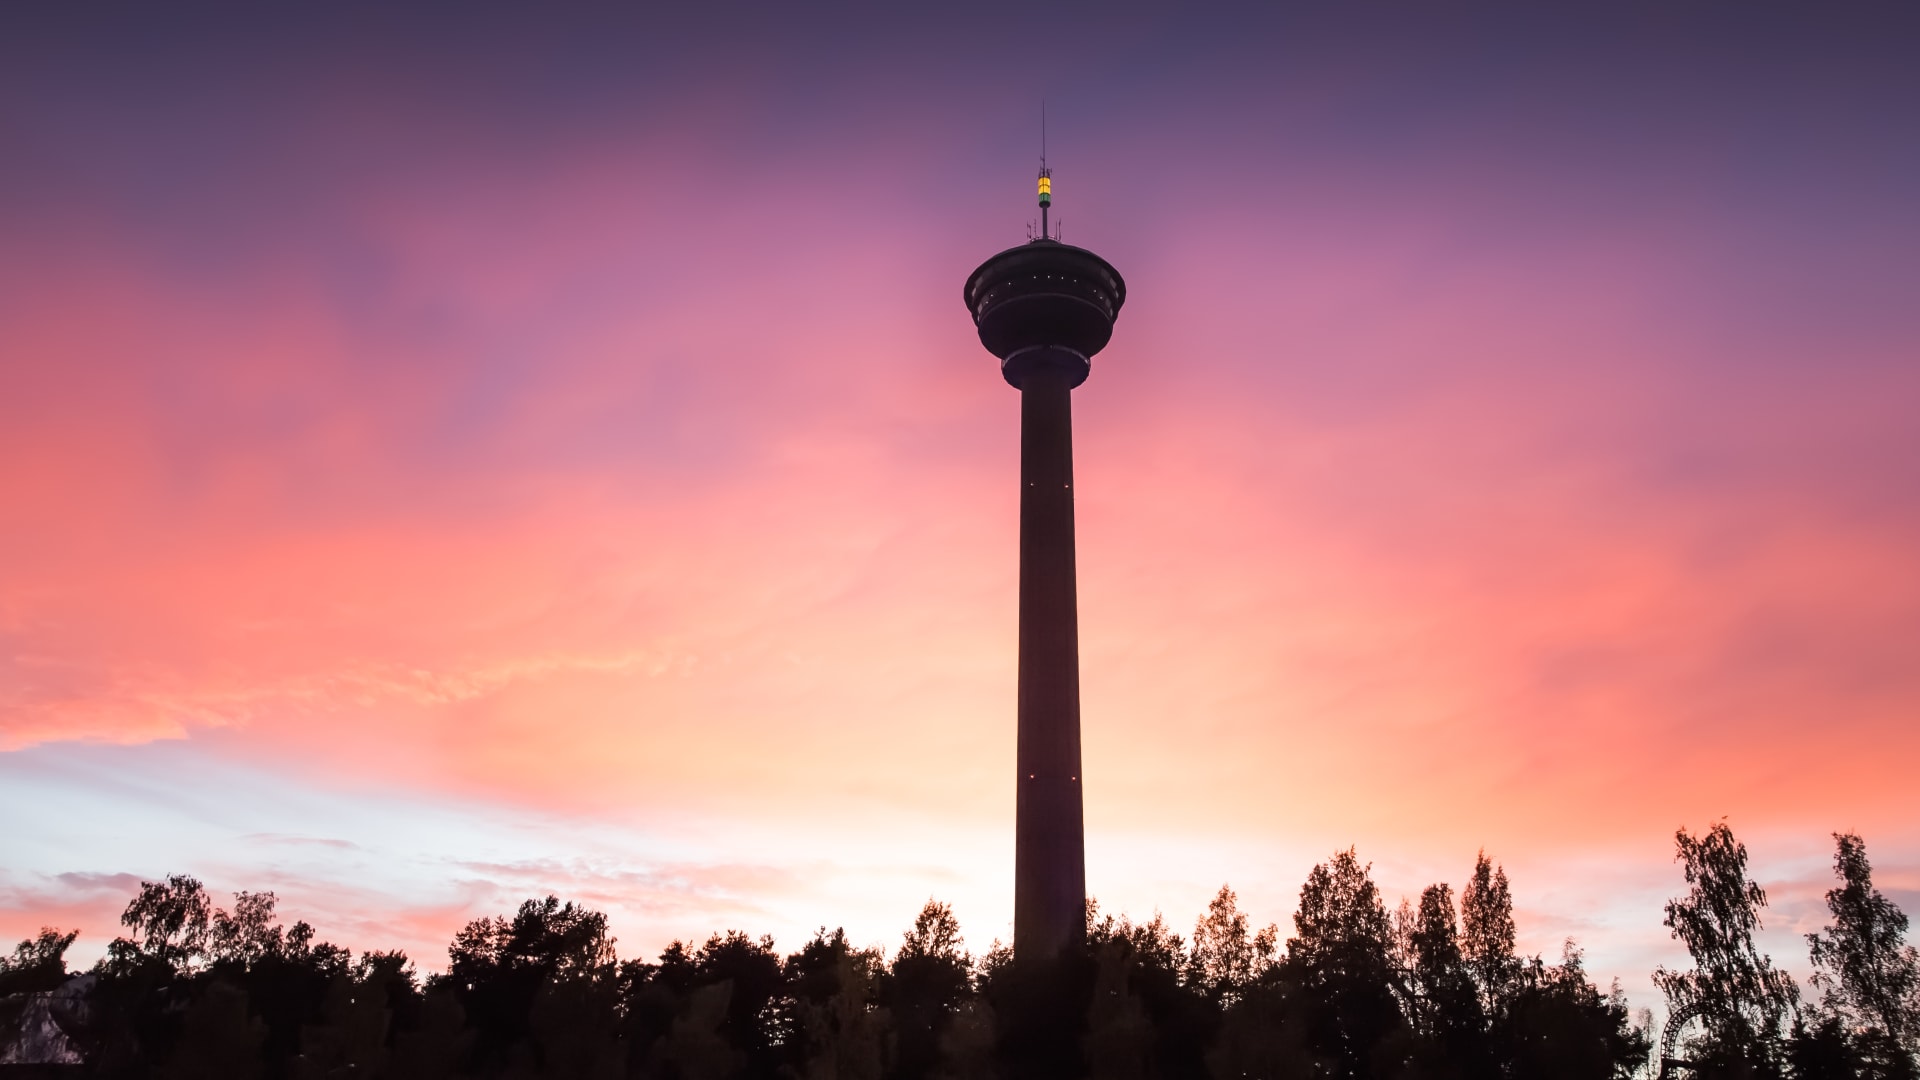 Näsinneula Observation Tower at night.